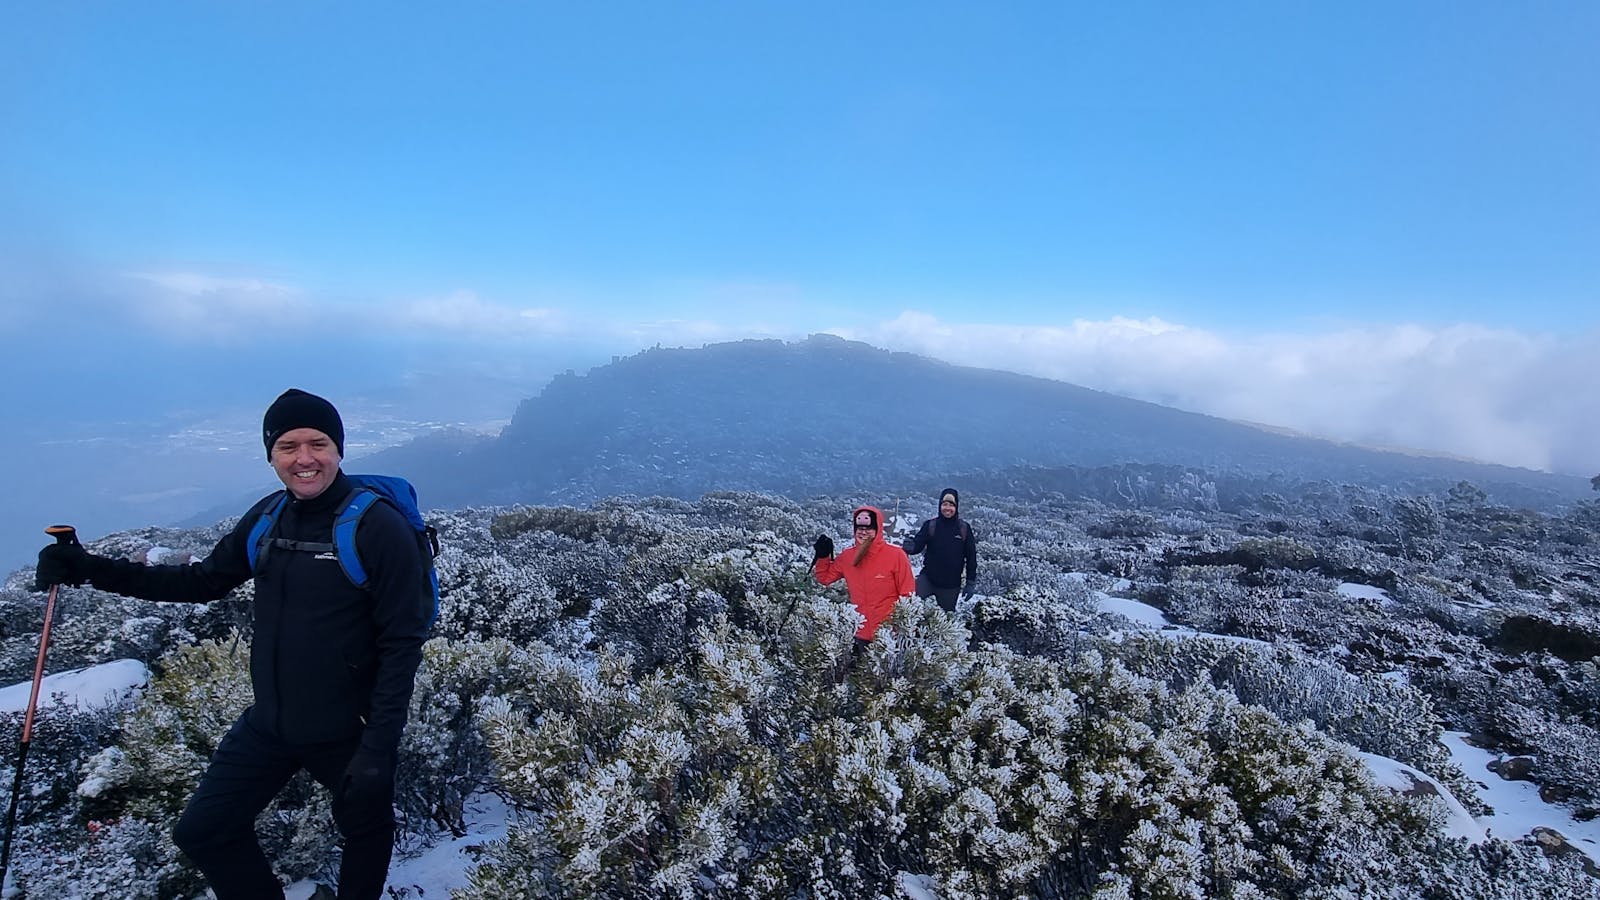 Winter walking on the alpine plateau of kunanyi / Mt Wellington